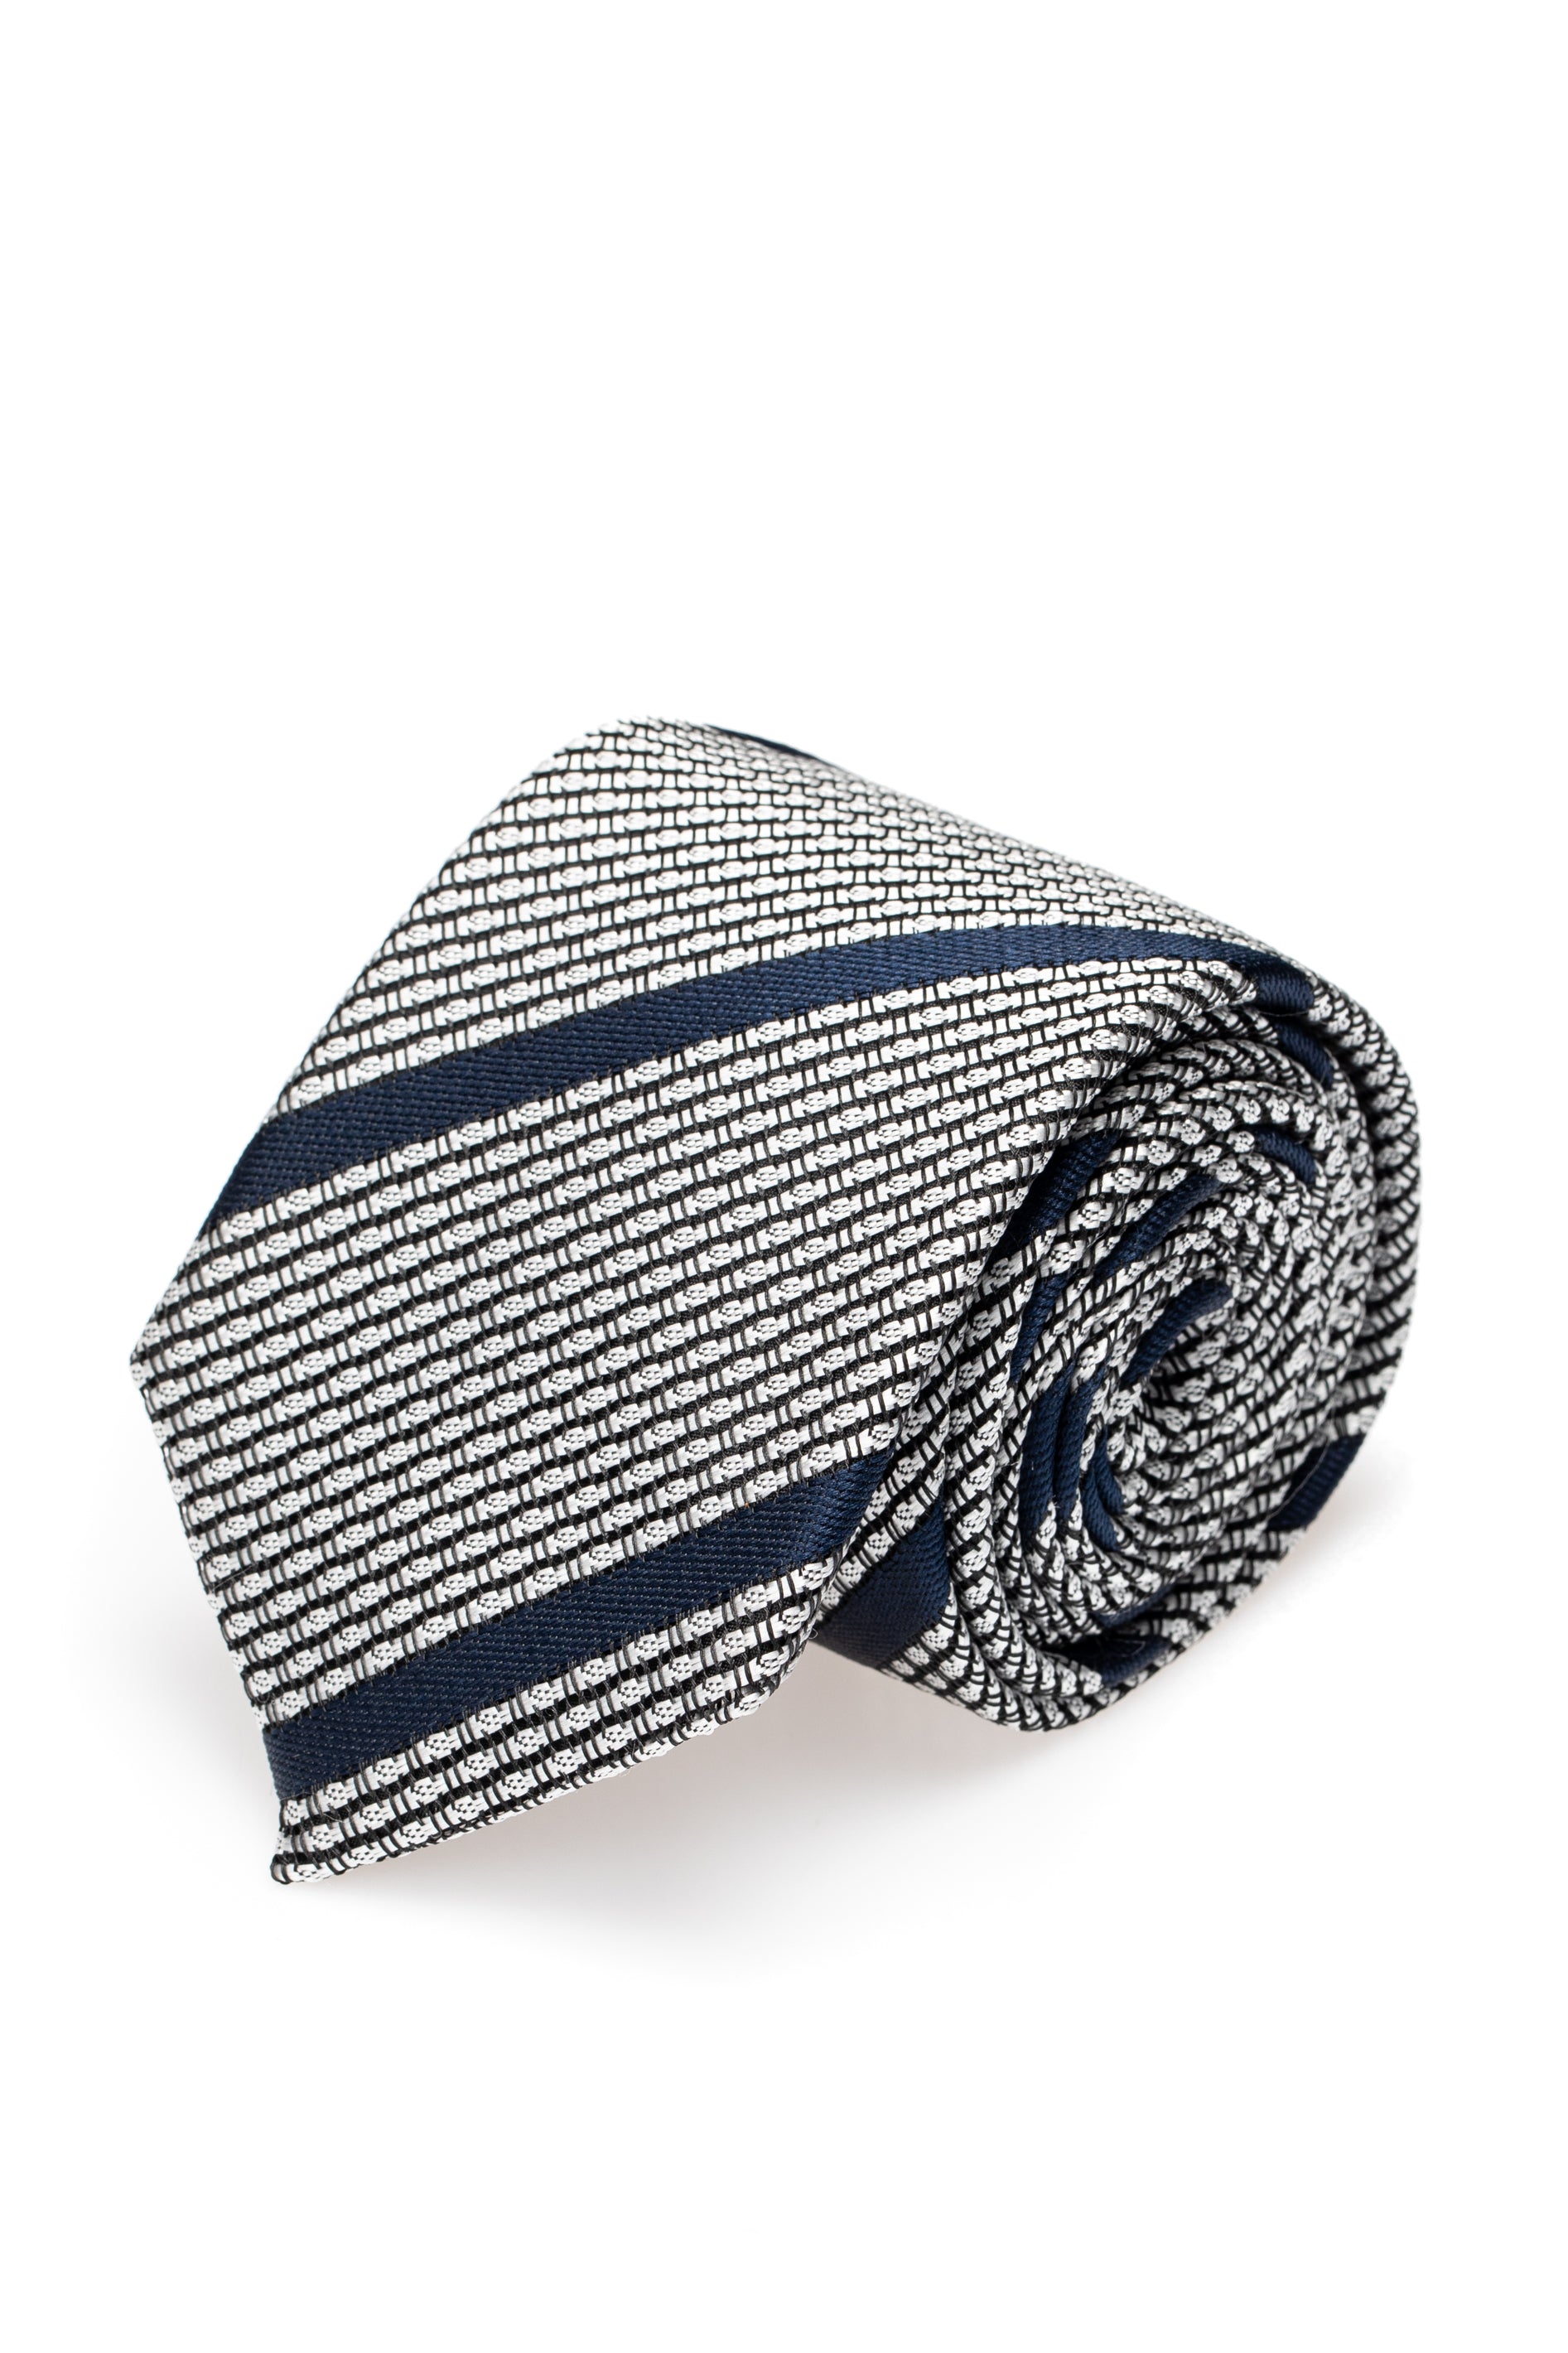 Silver silk tie with stripes